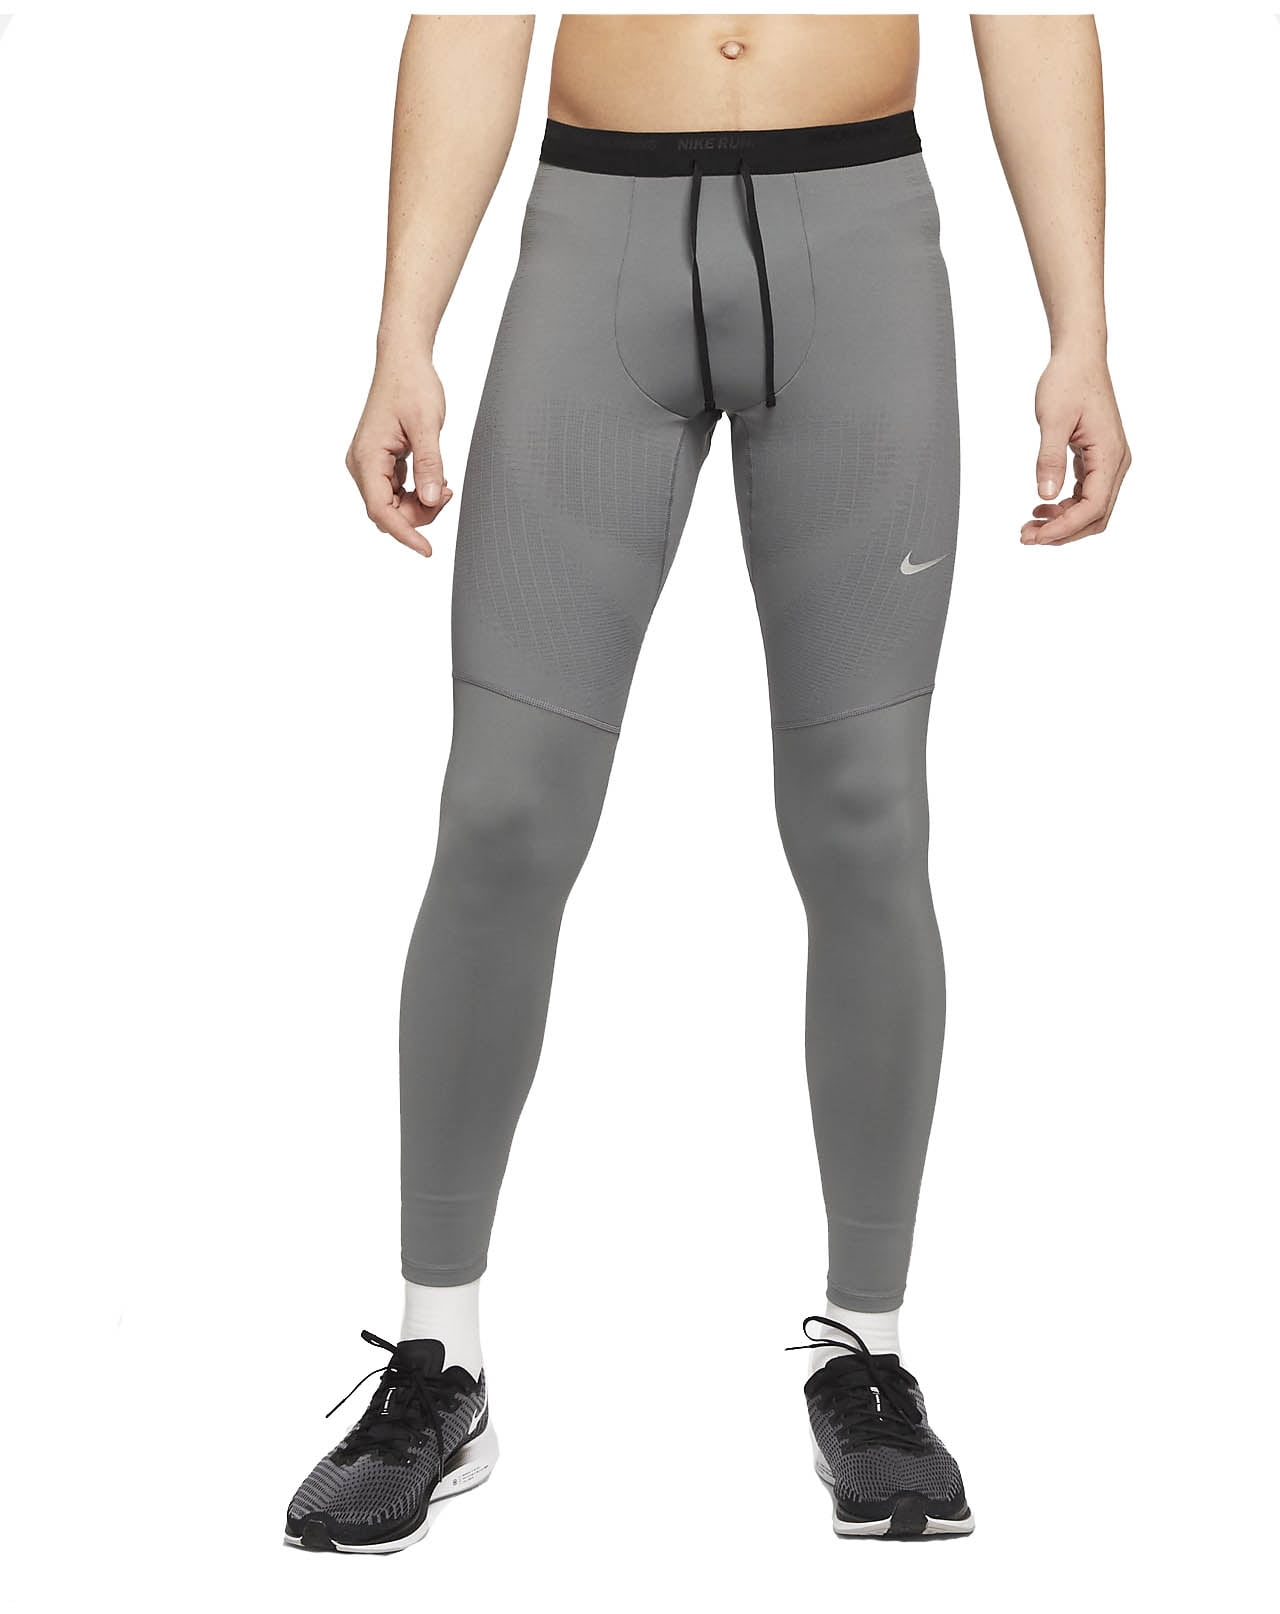 Nike Men's Phenom Elite Running Tights (Smoke Grey, Medium